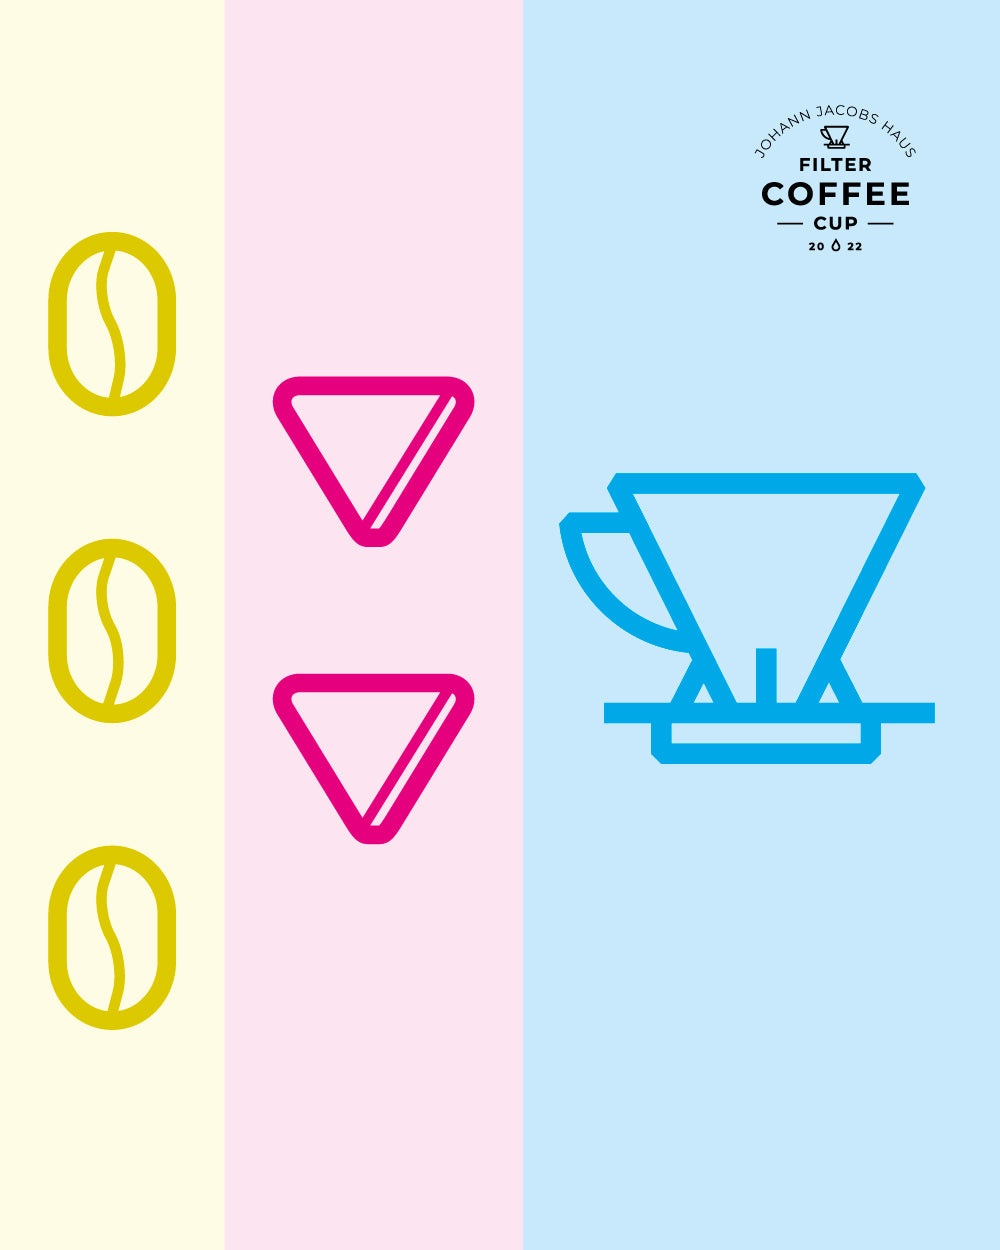 Kaffee Box zum Filter Coffee Cup 2022